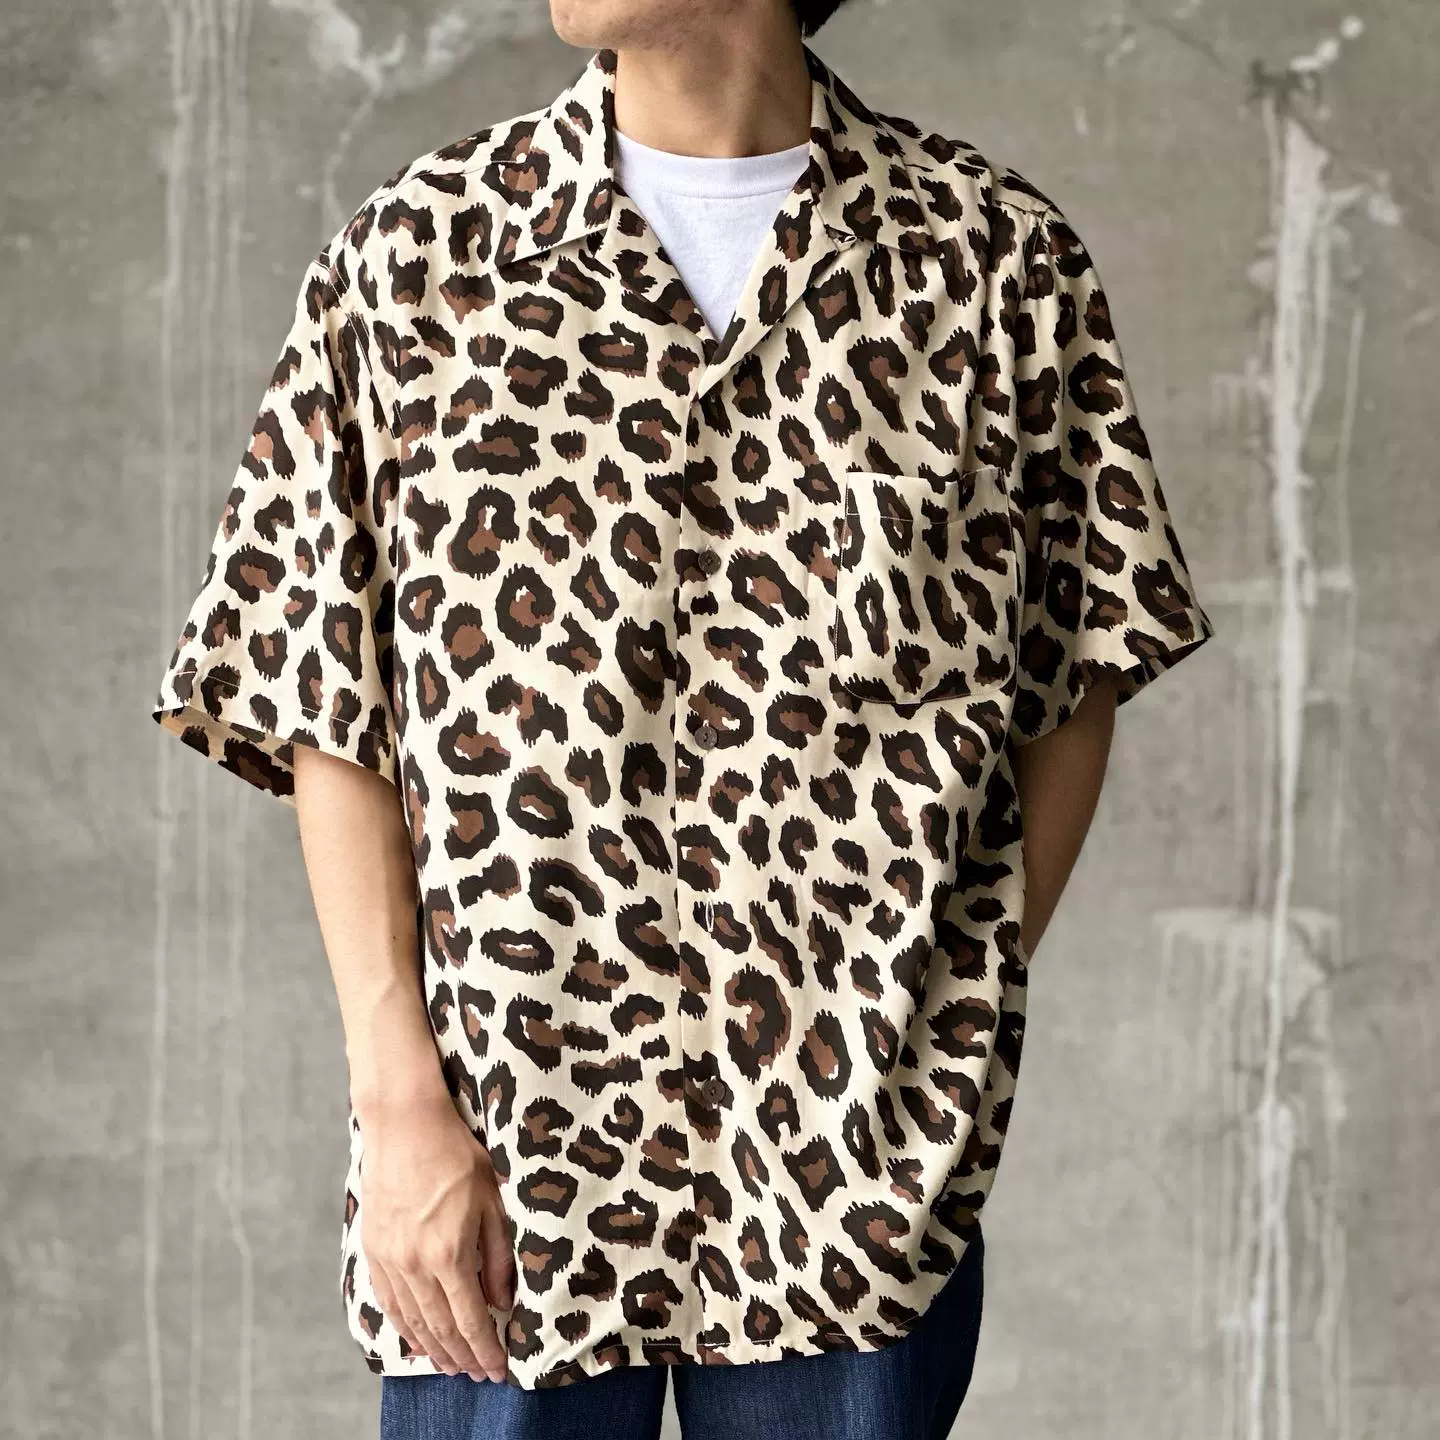 壹树WACKO MARIA DICKIES/WORK SHIRT 豹纹纯色短袖衬衫23SS - Taobao